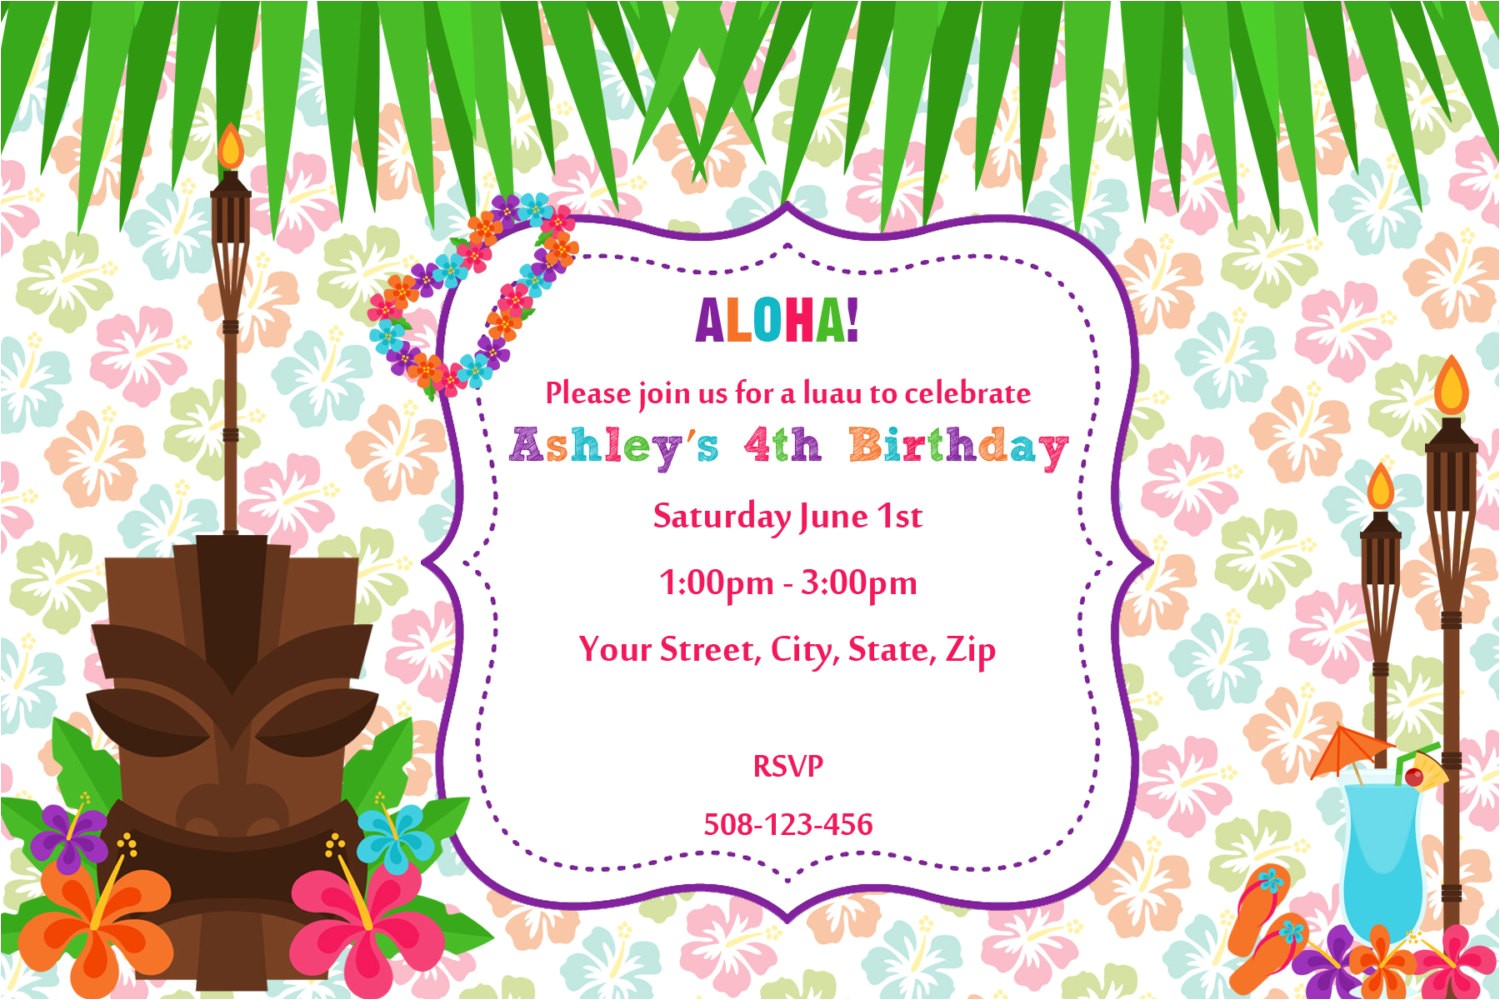 luau birthday invitations